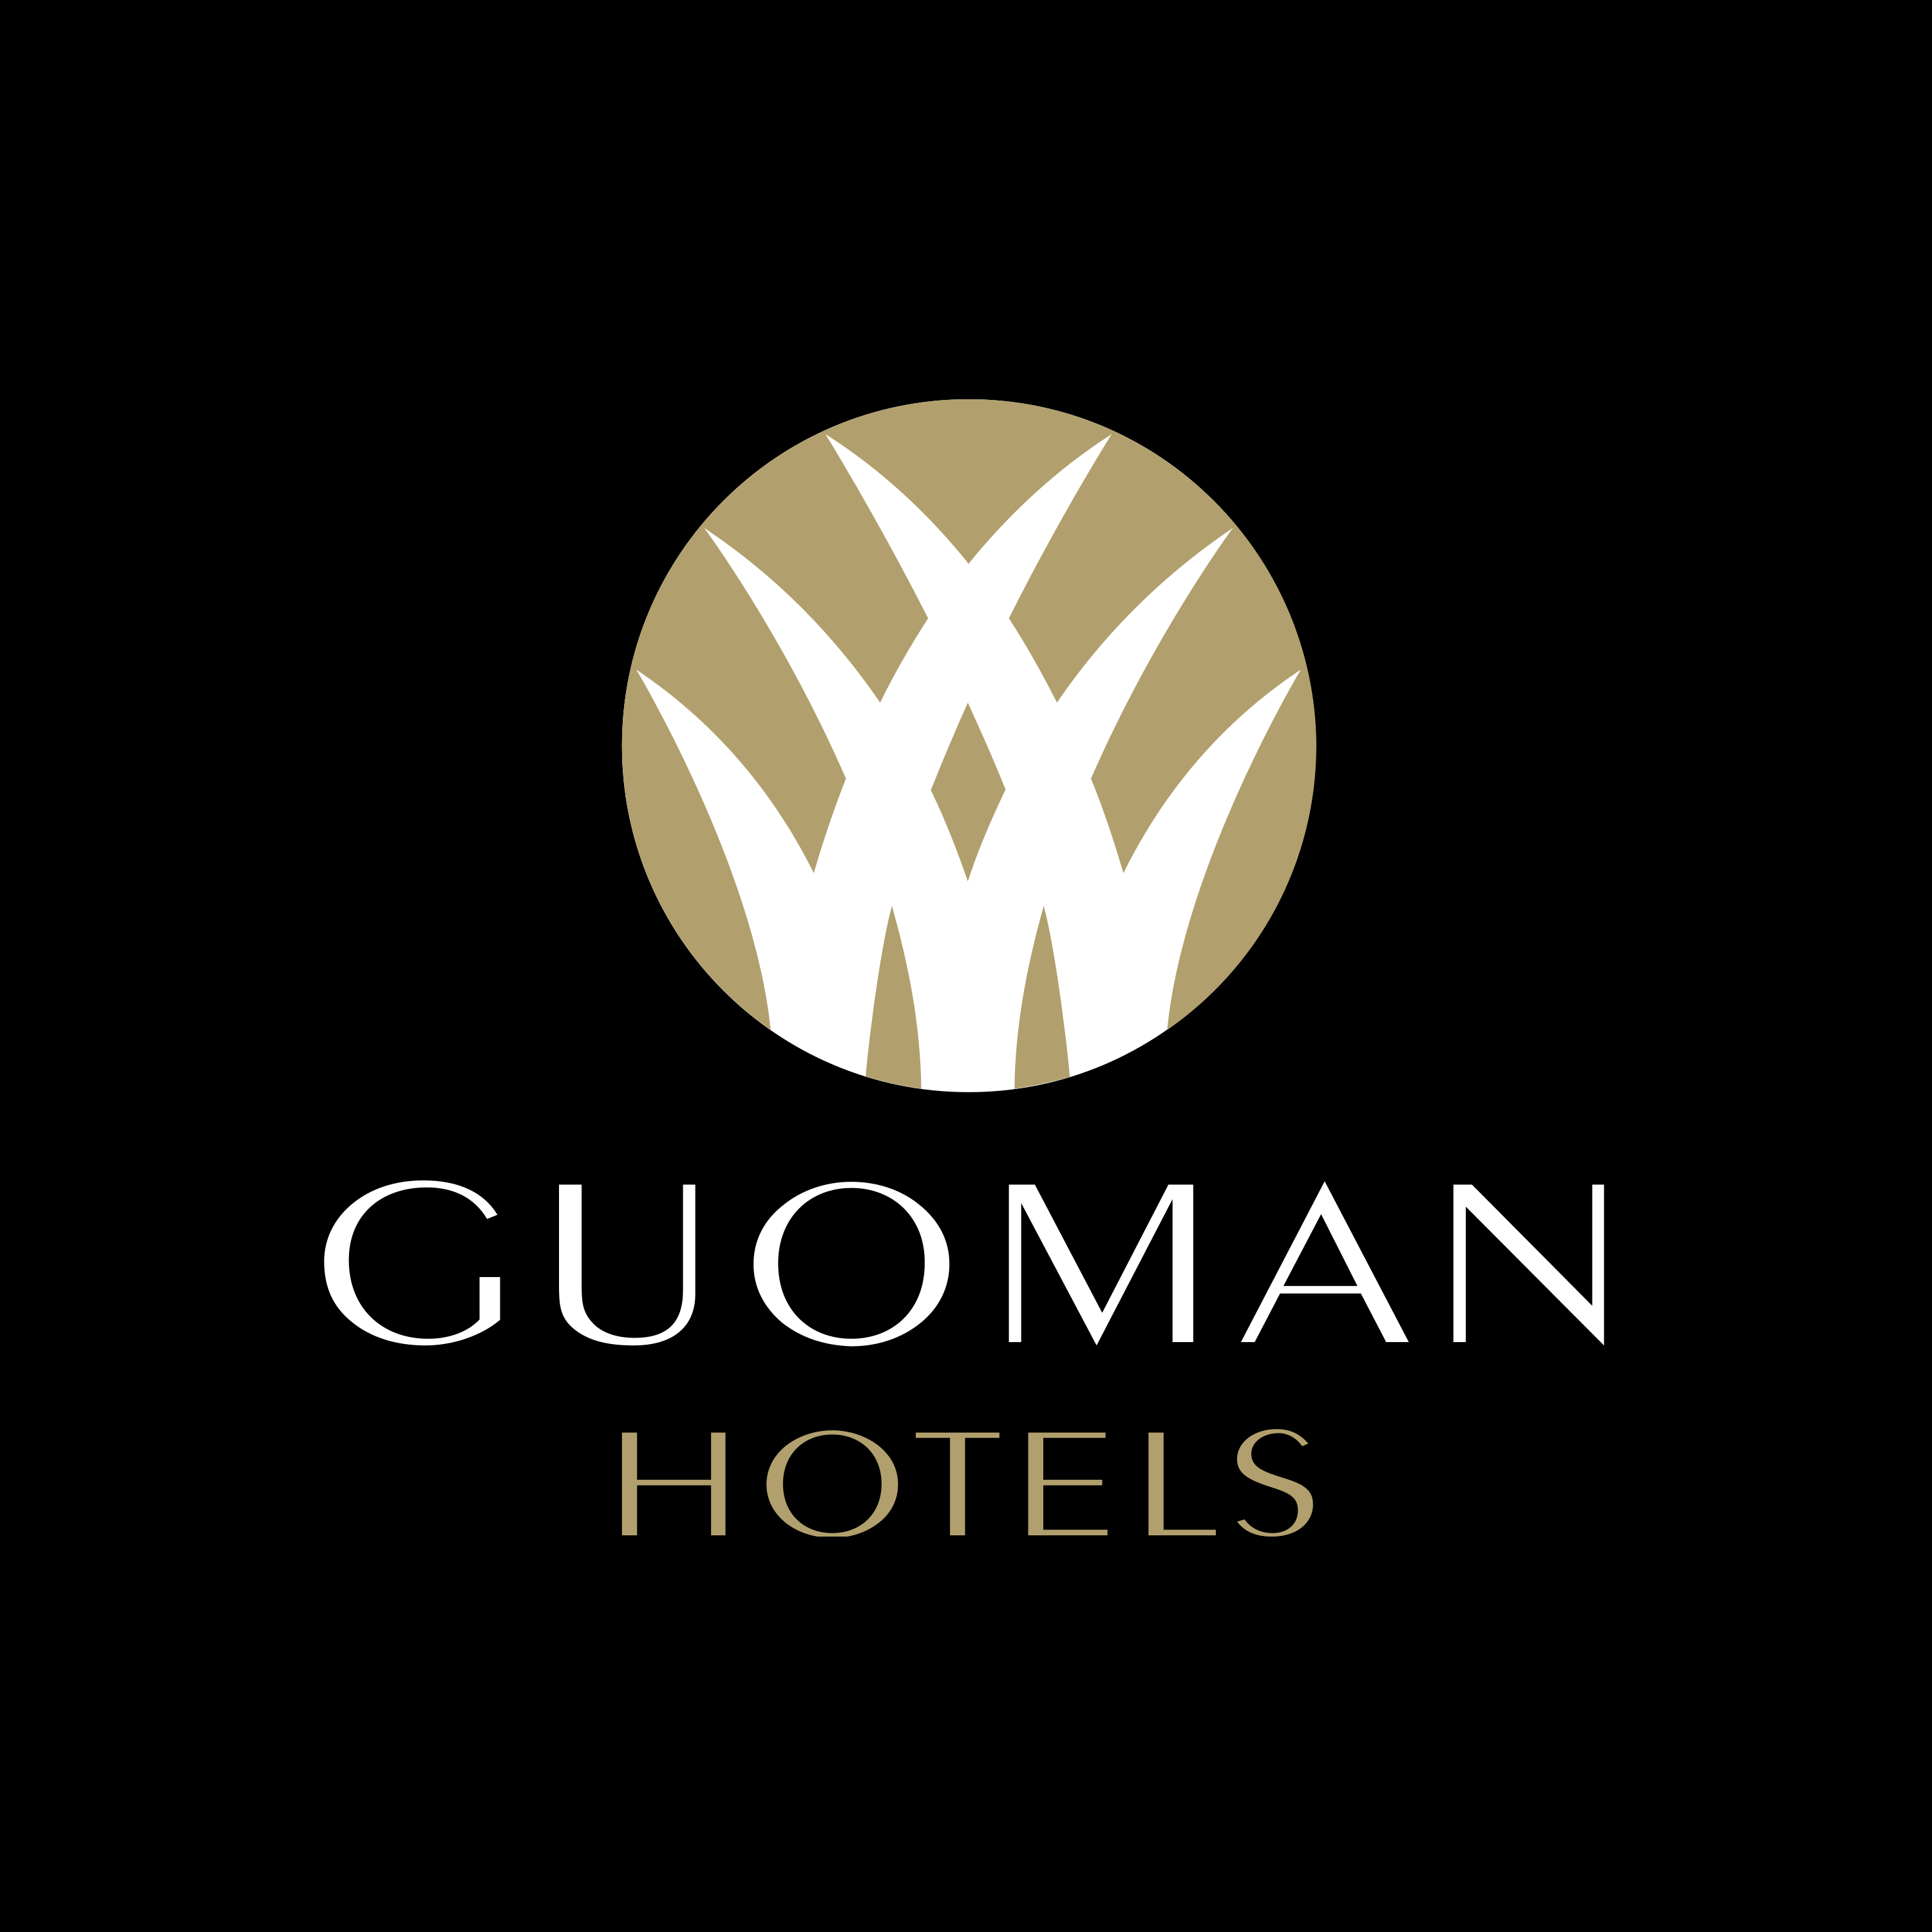 Guoman Coupons & Promo Codes